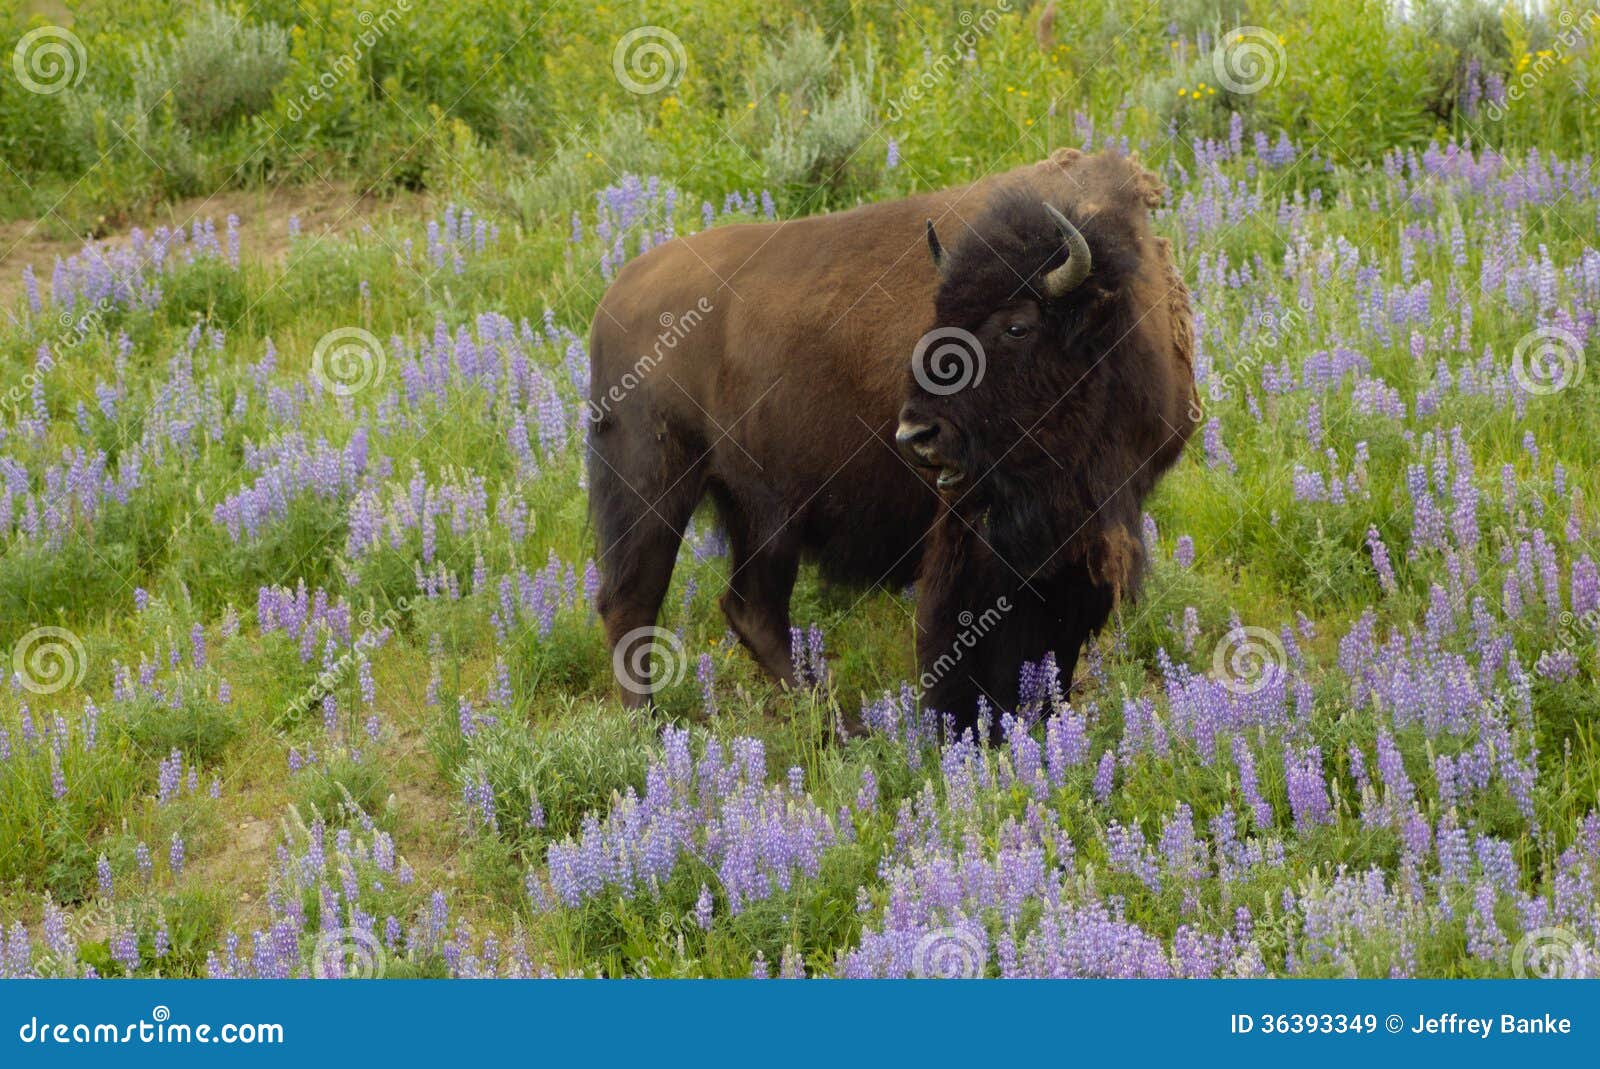 buffalo in the wildflowers